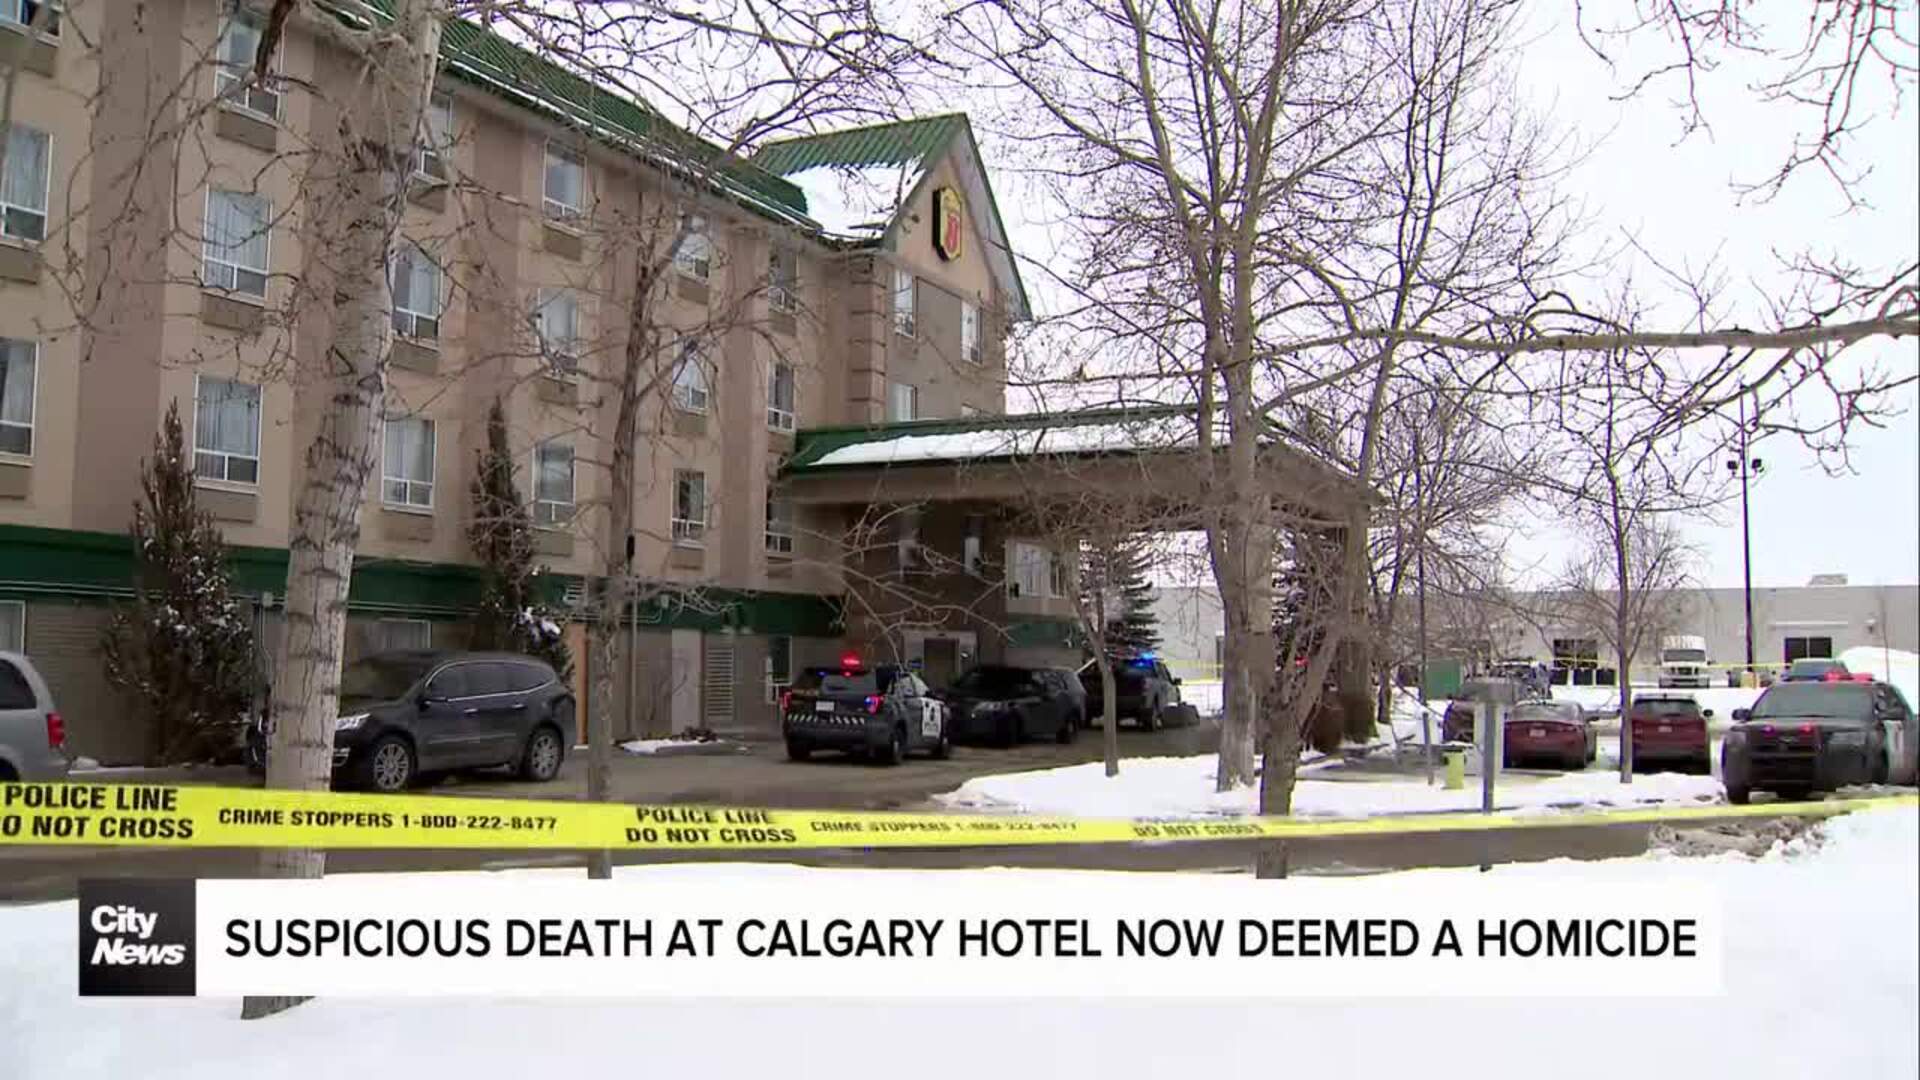 Suspicious death at a Calgary hotel deemed a homicide